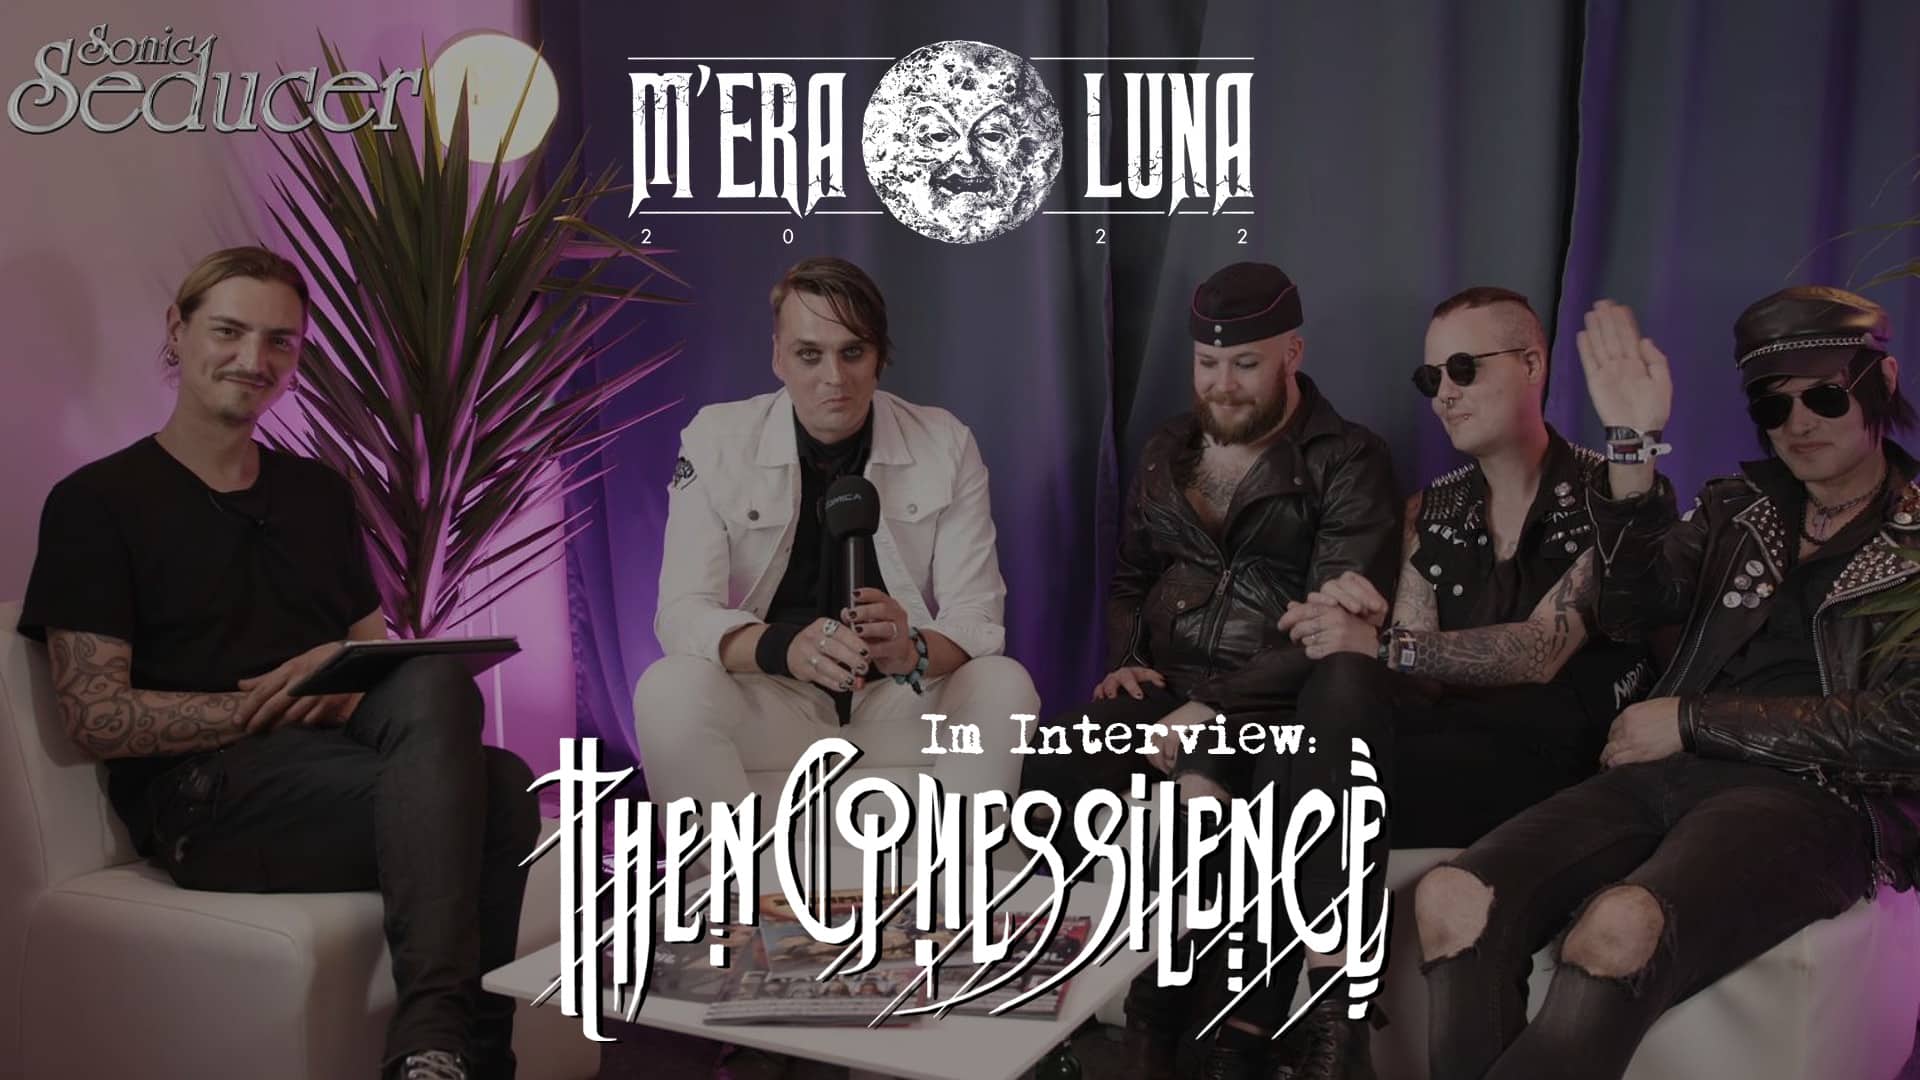 sonic-seducer-mera-luna-festival-2022-interview-michael-sele-then-comes-silence.jpg